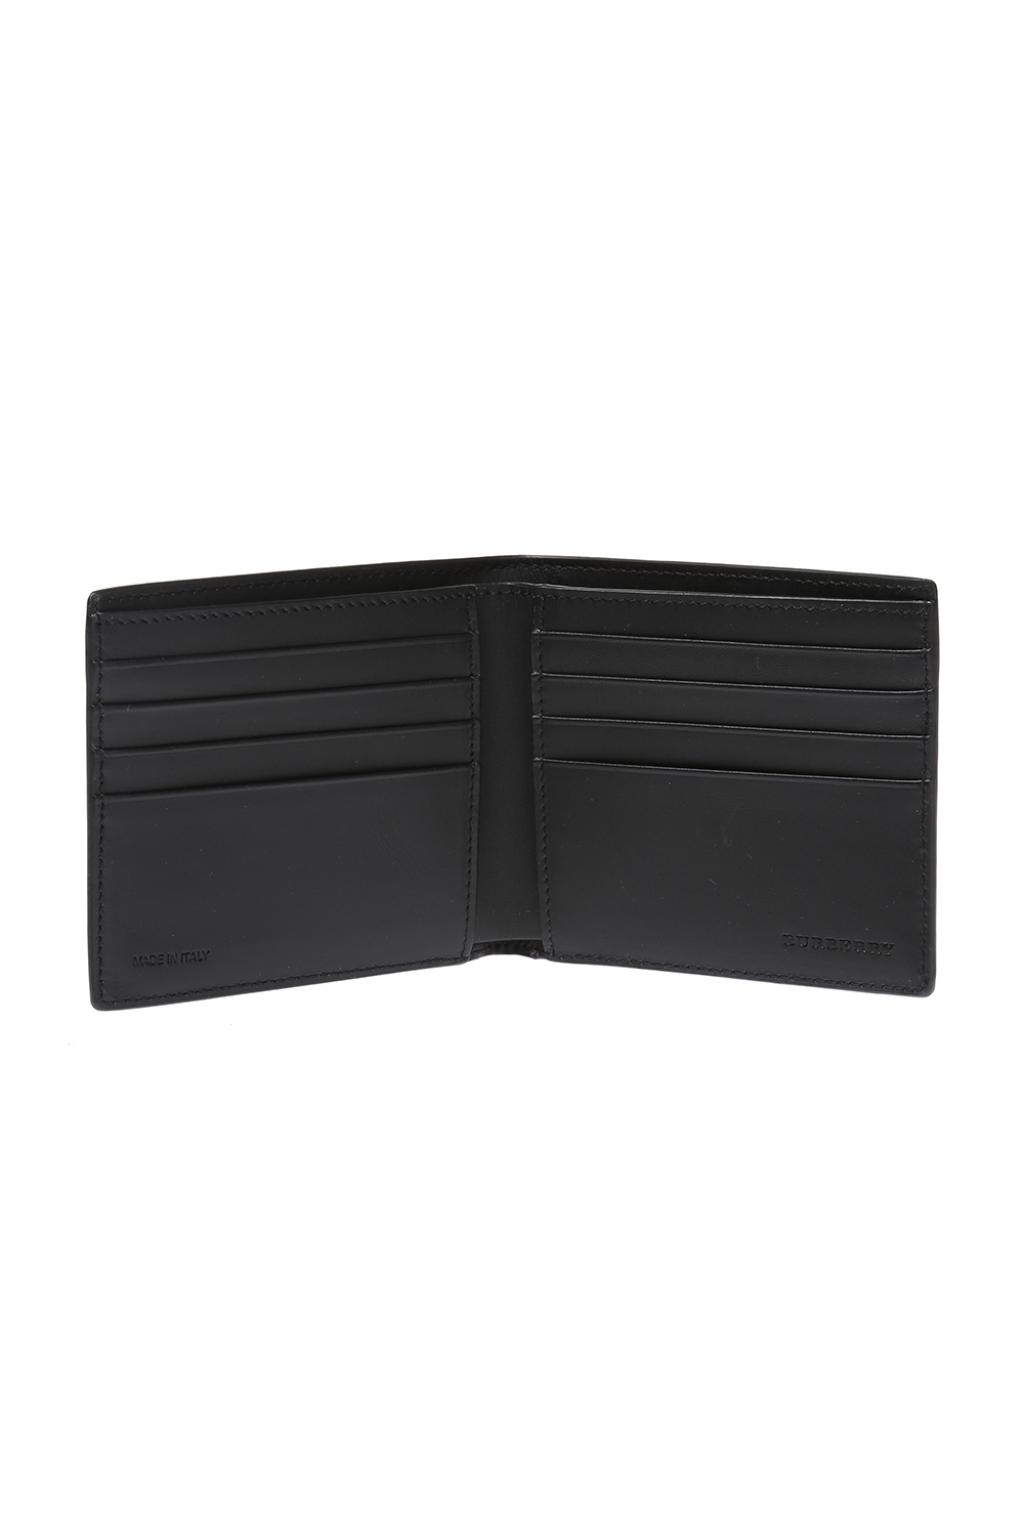 Burberry 'Reg' leather wallet, Men's